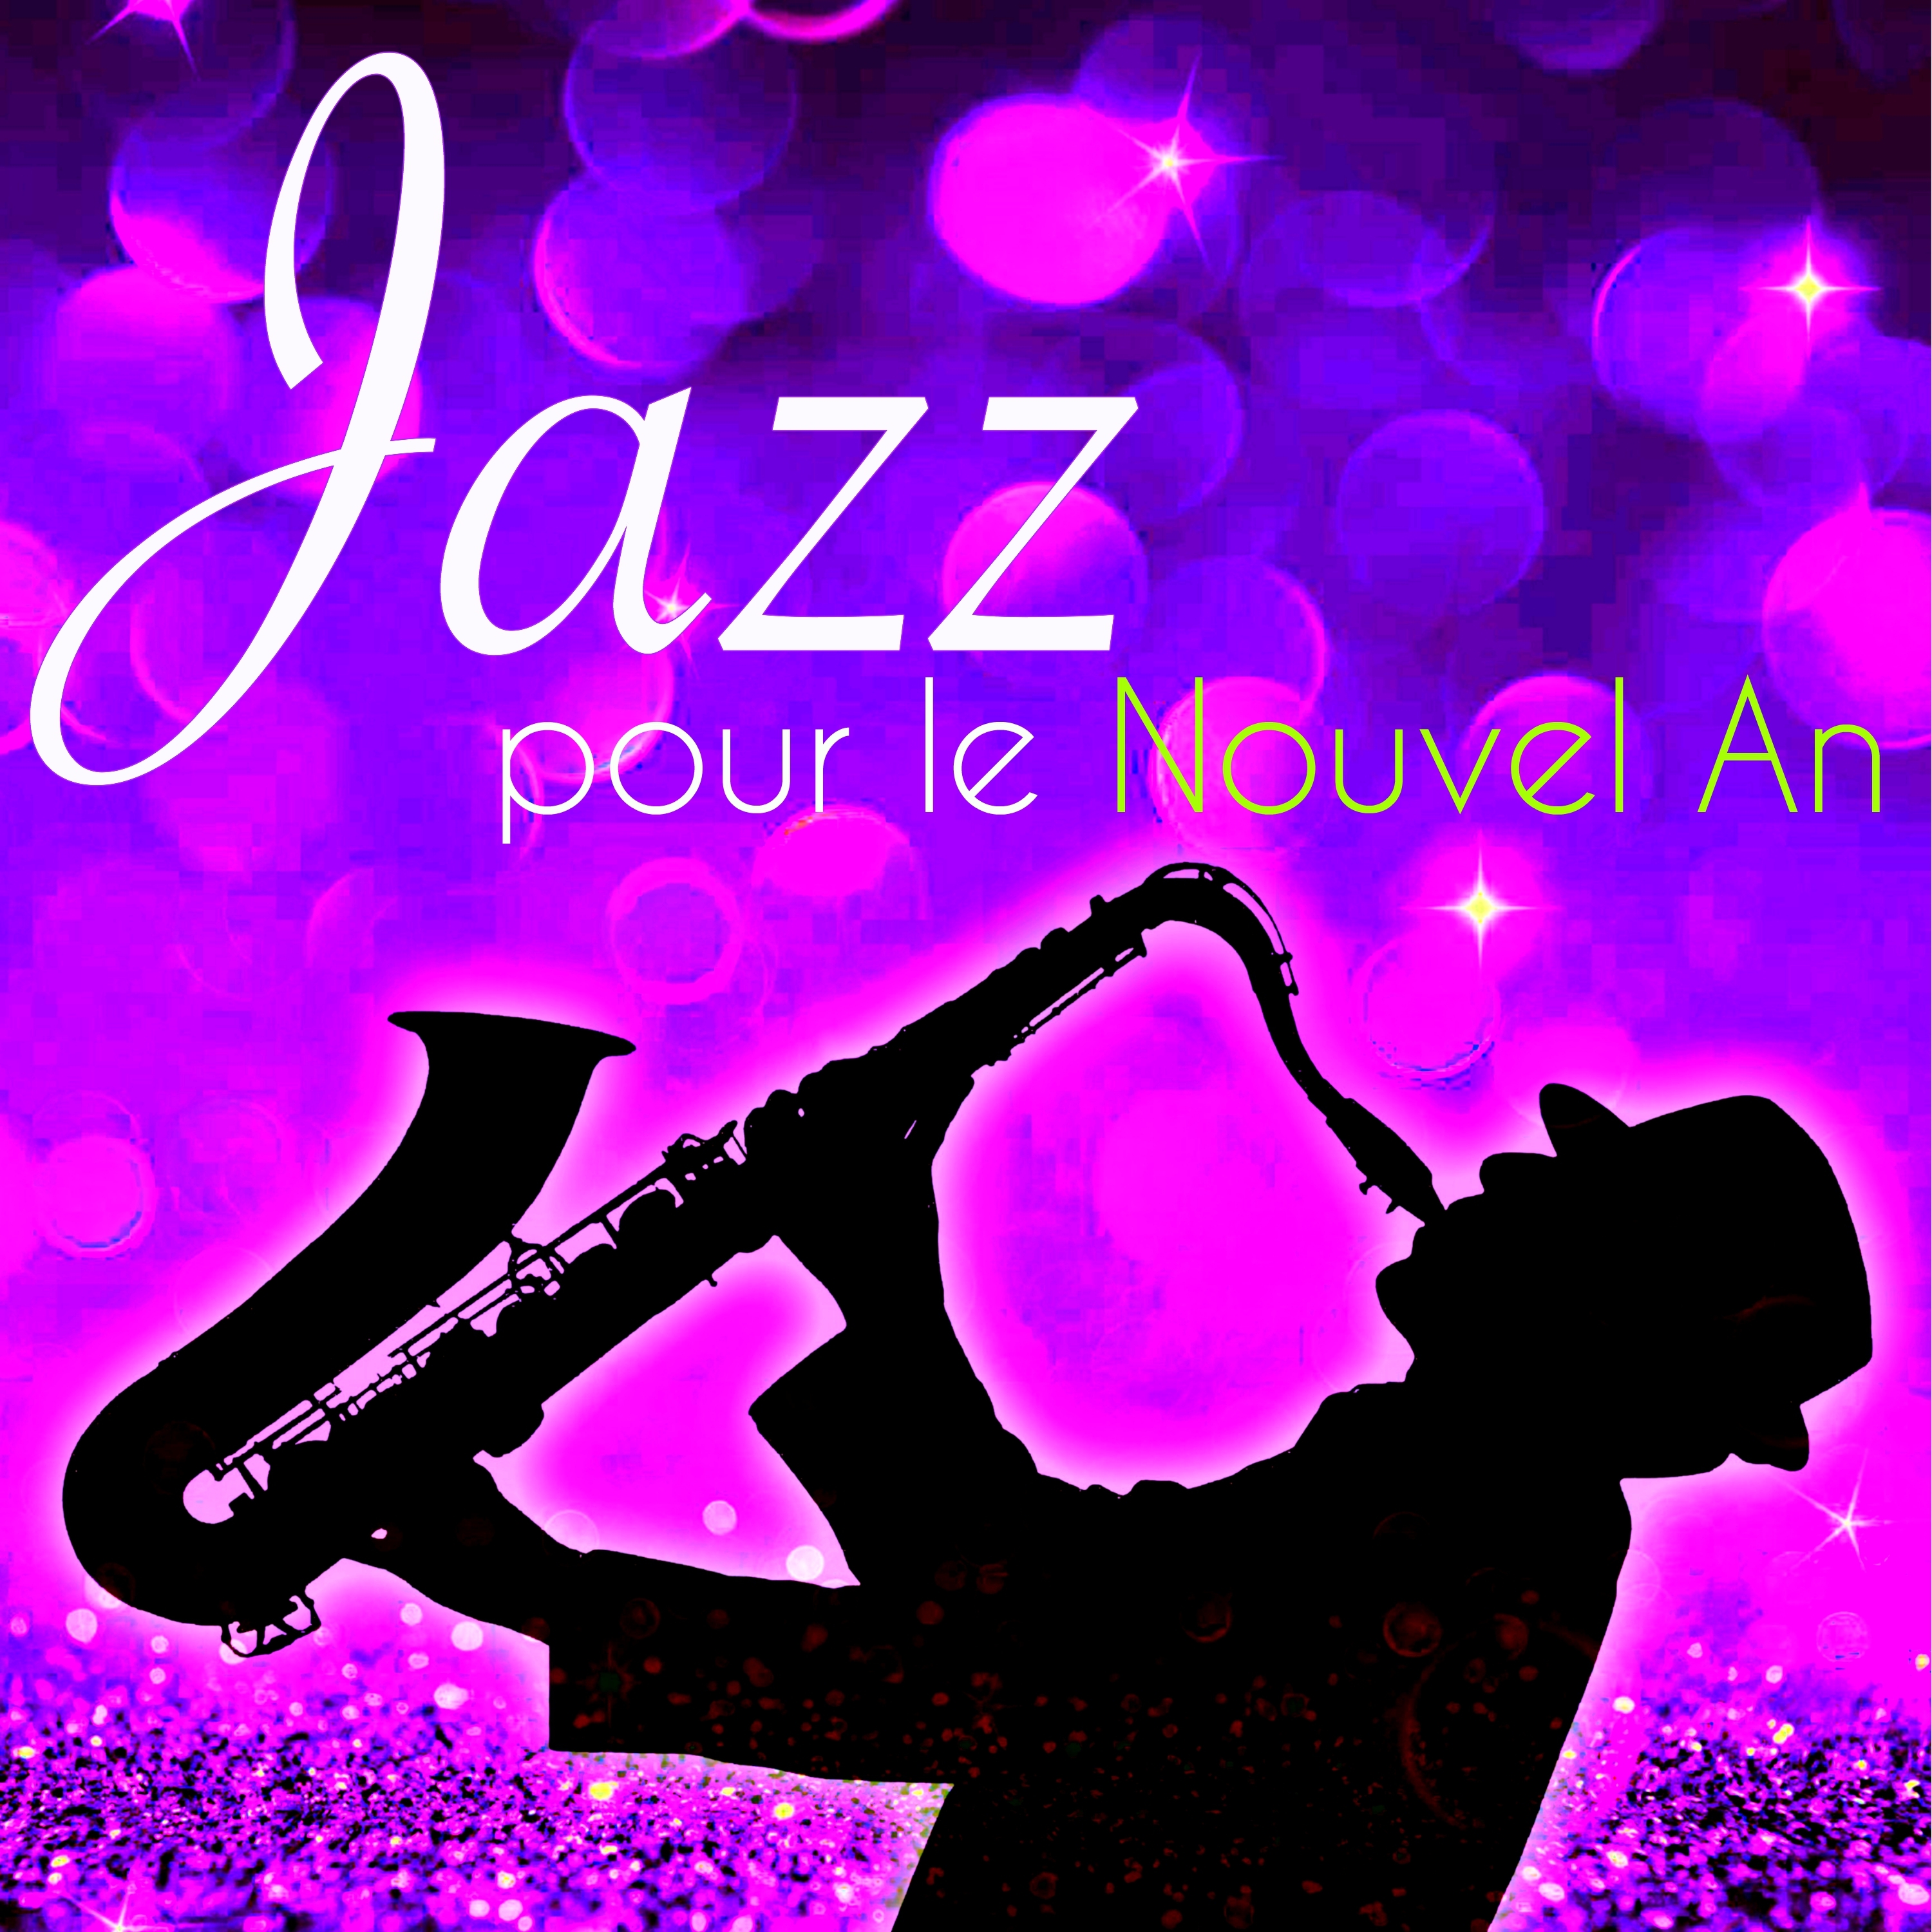 Smooth jazz **** music for sensual nightlife